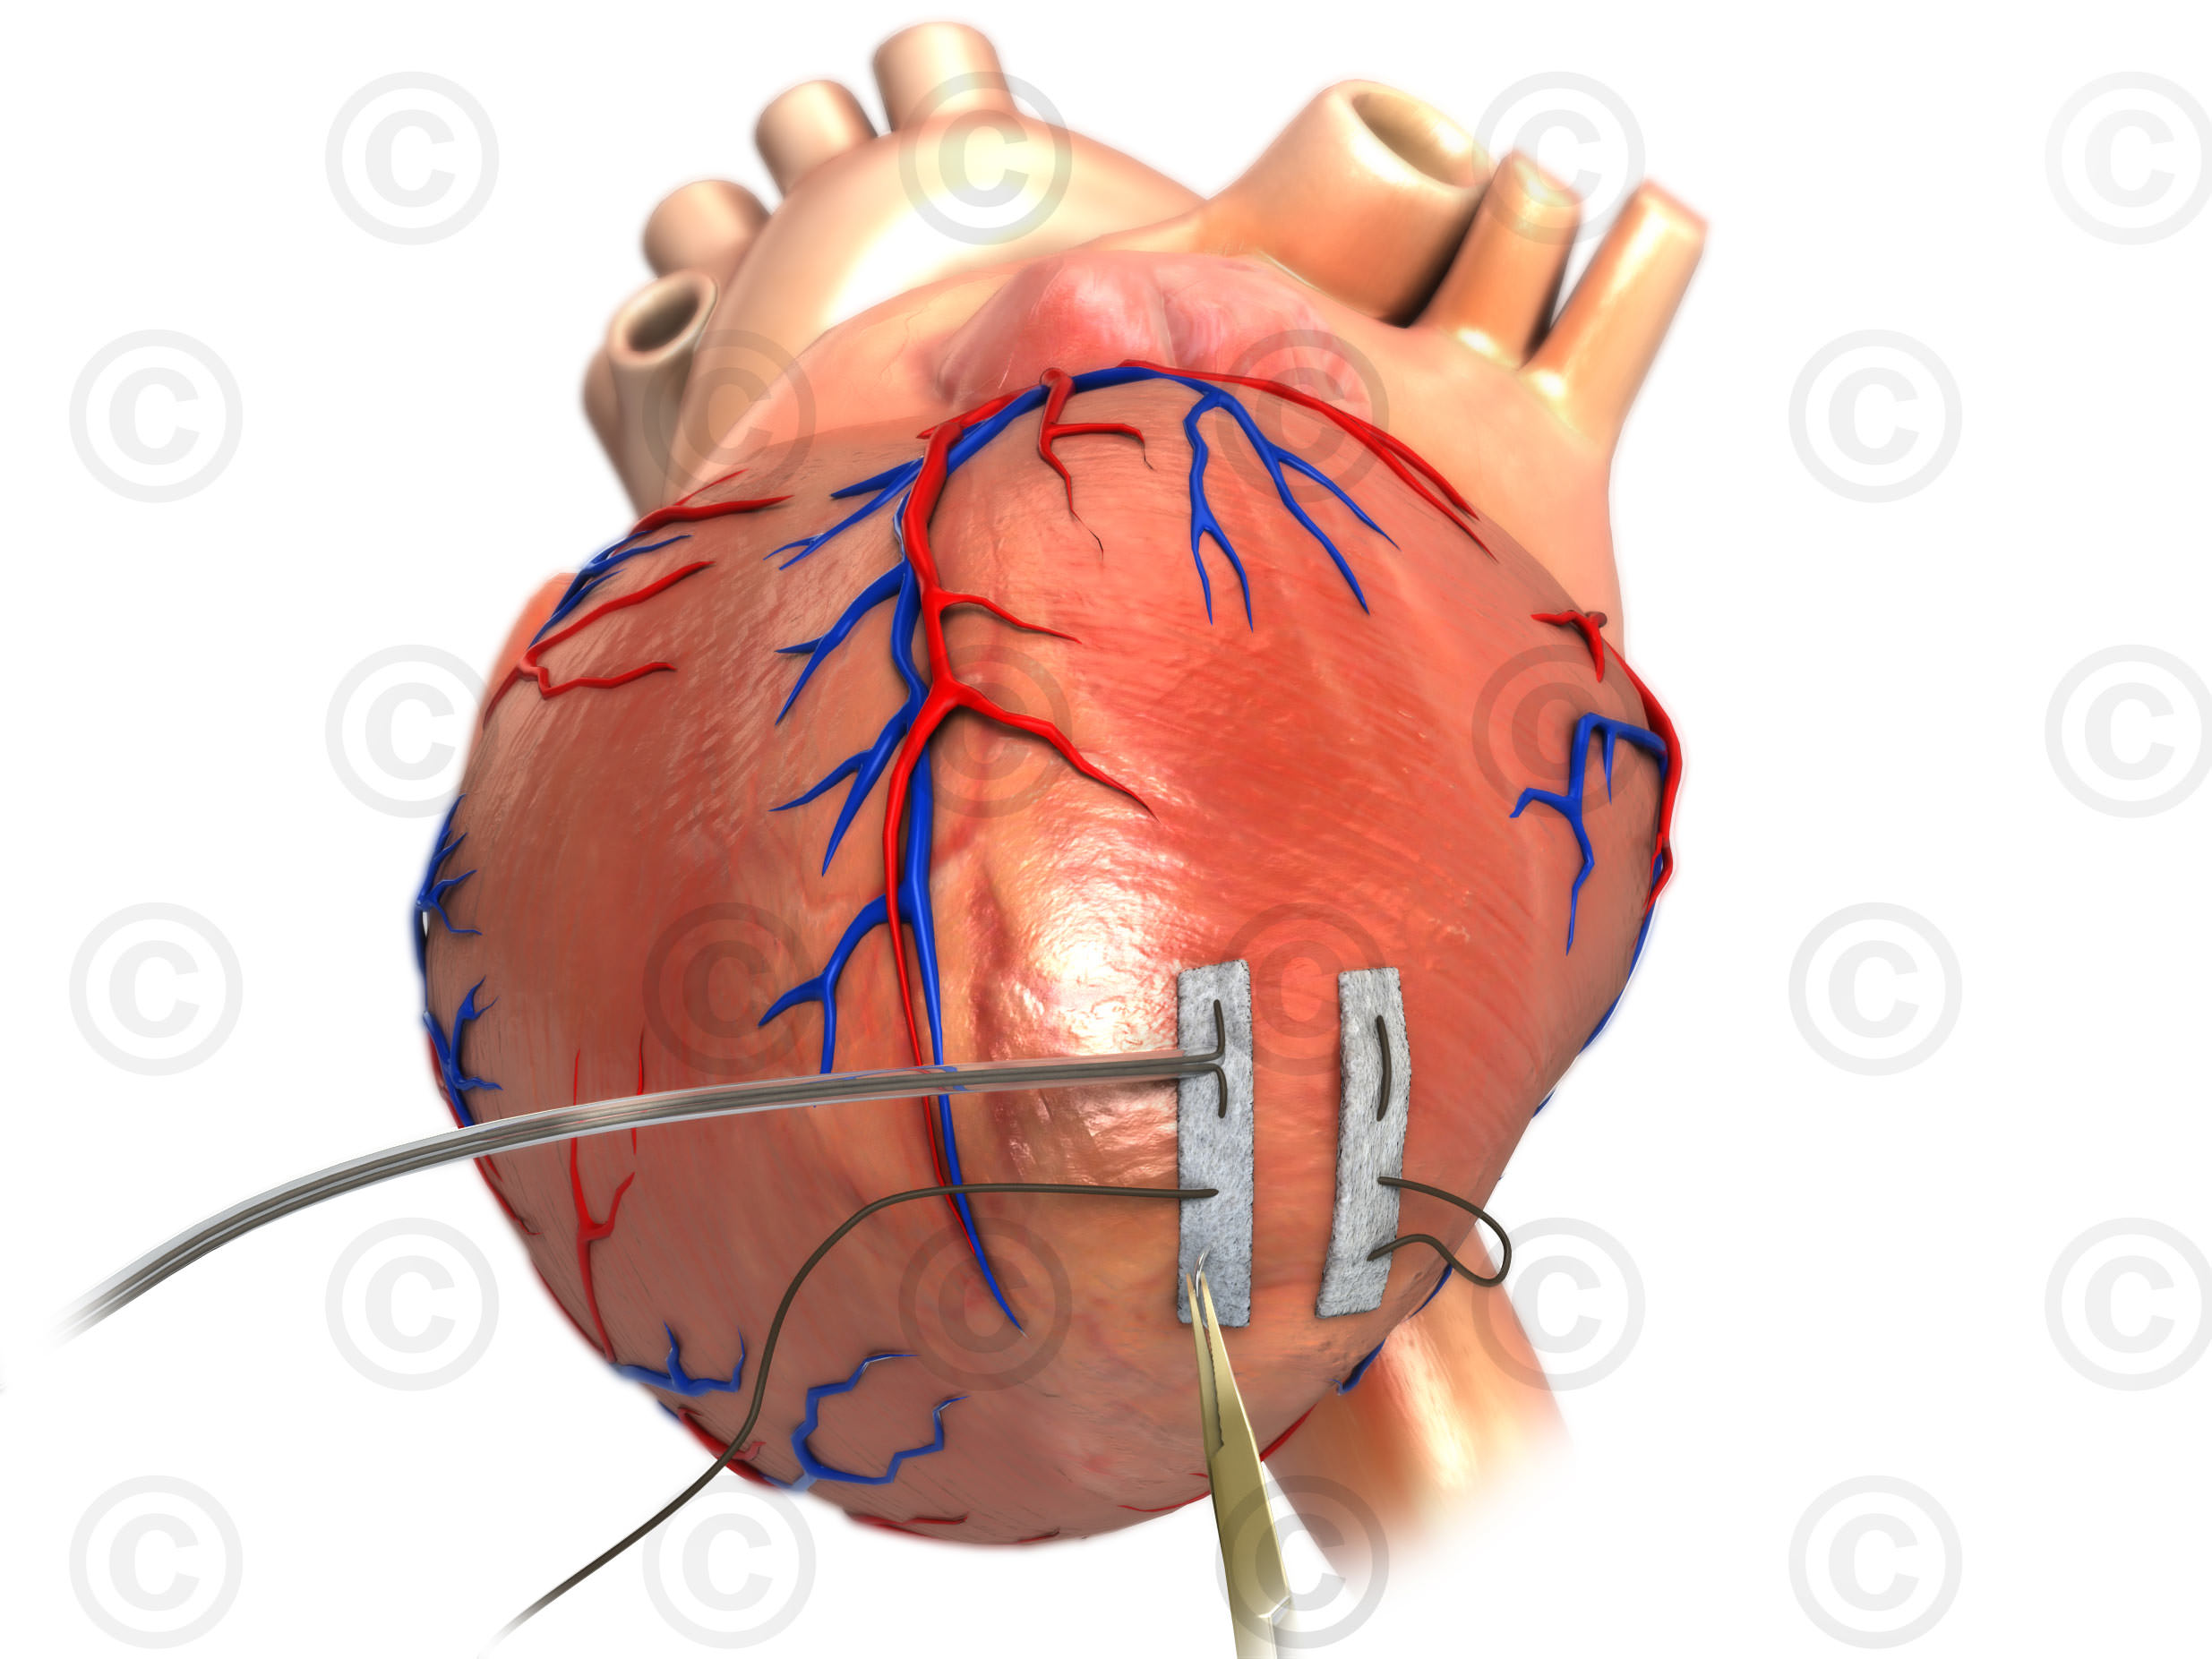 Transcatheter aortic valve implantation